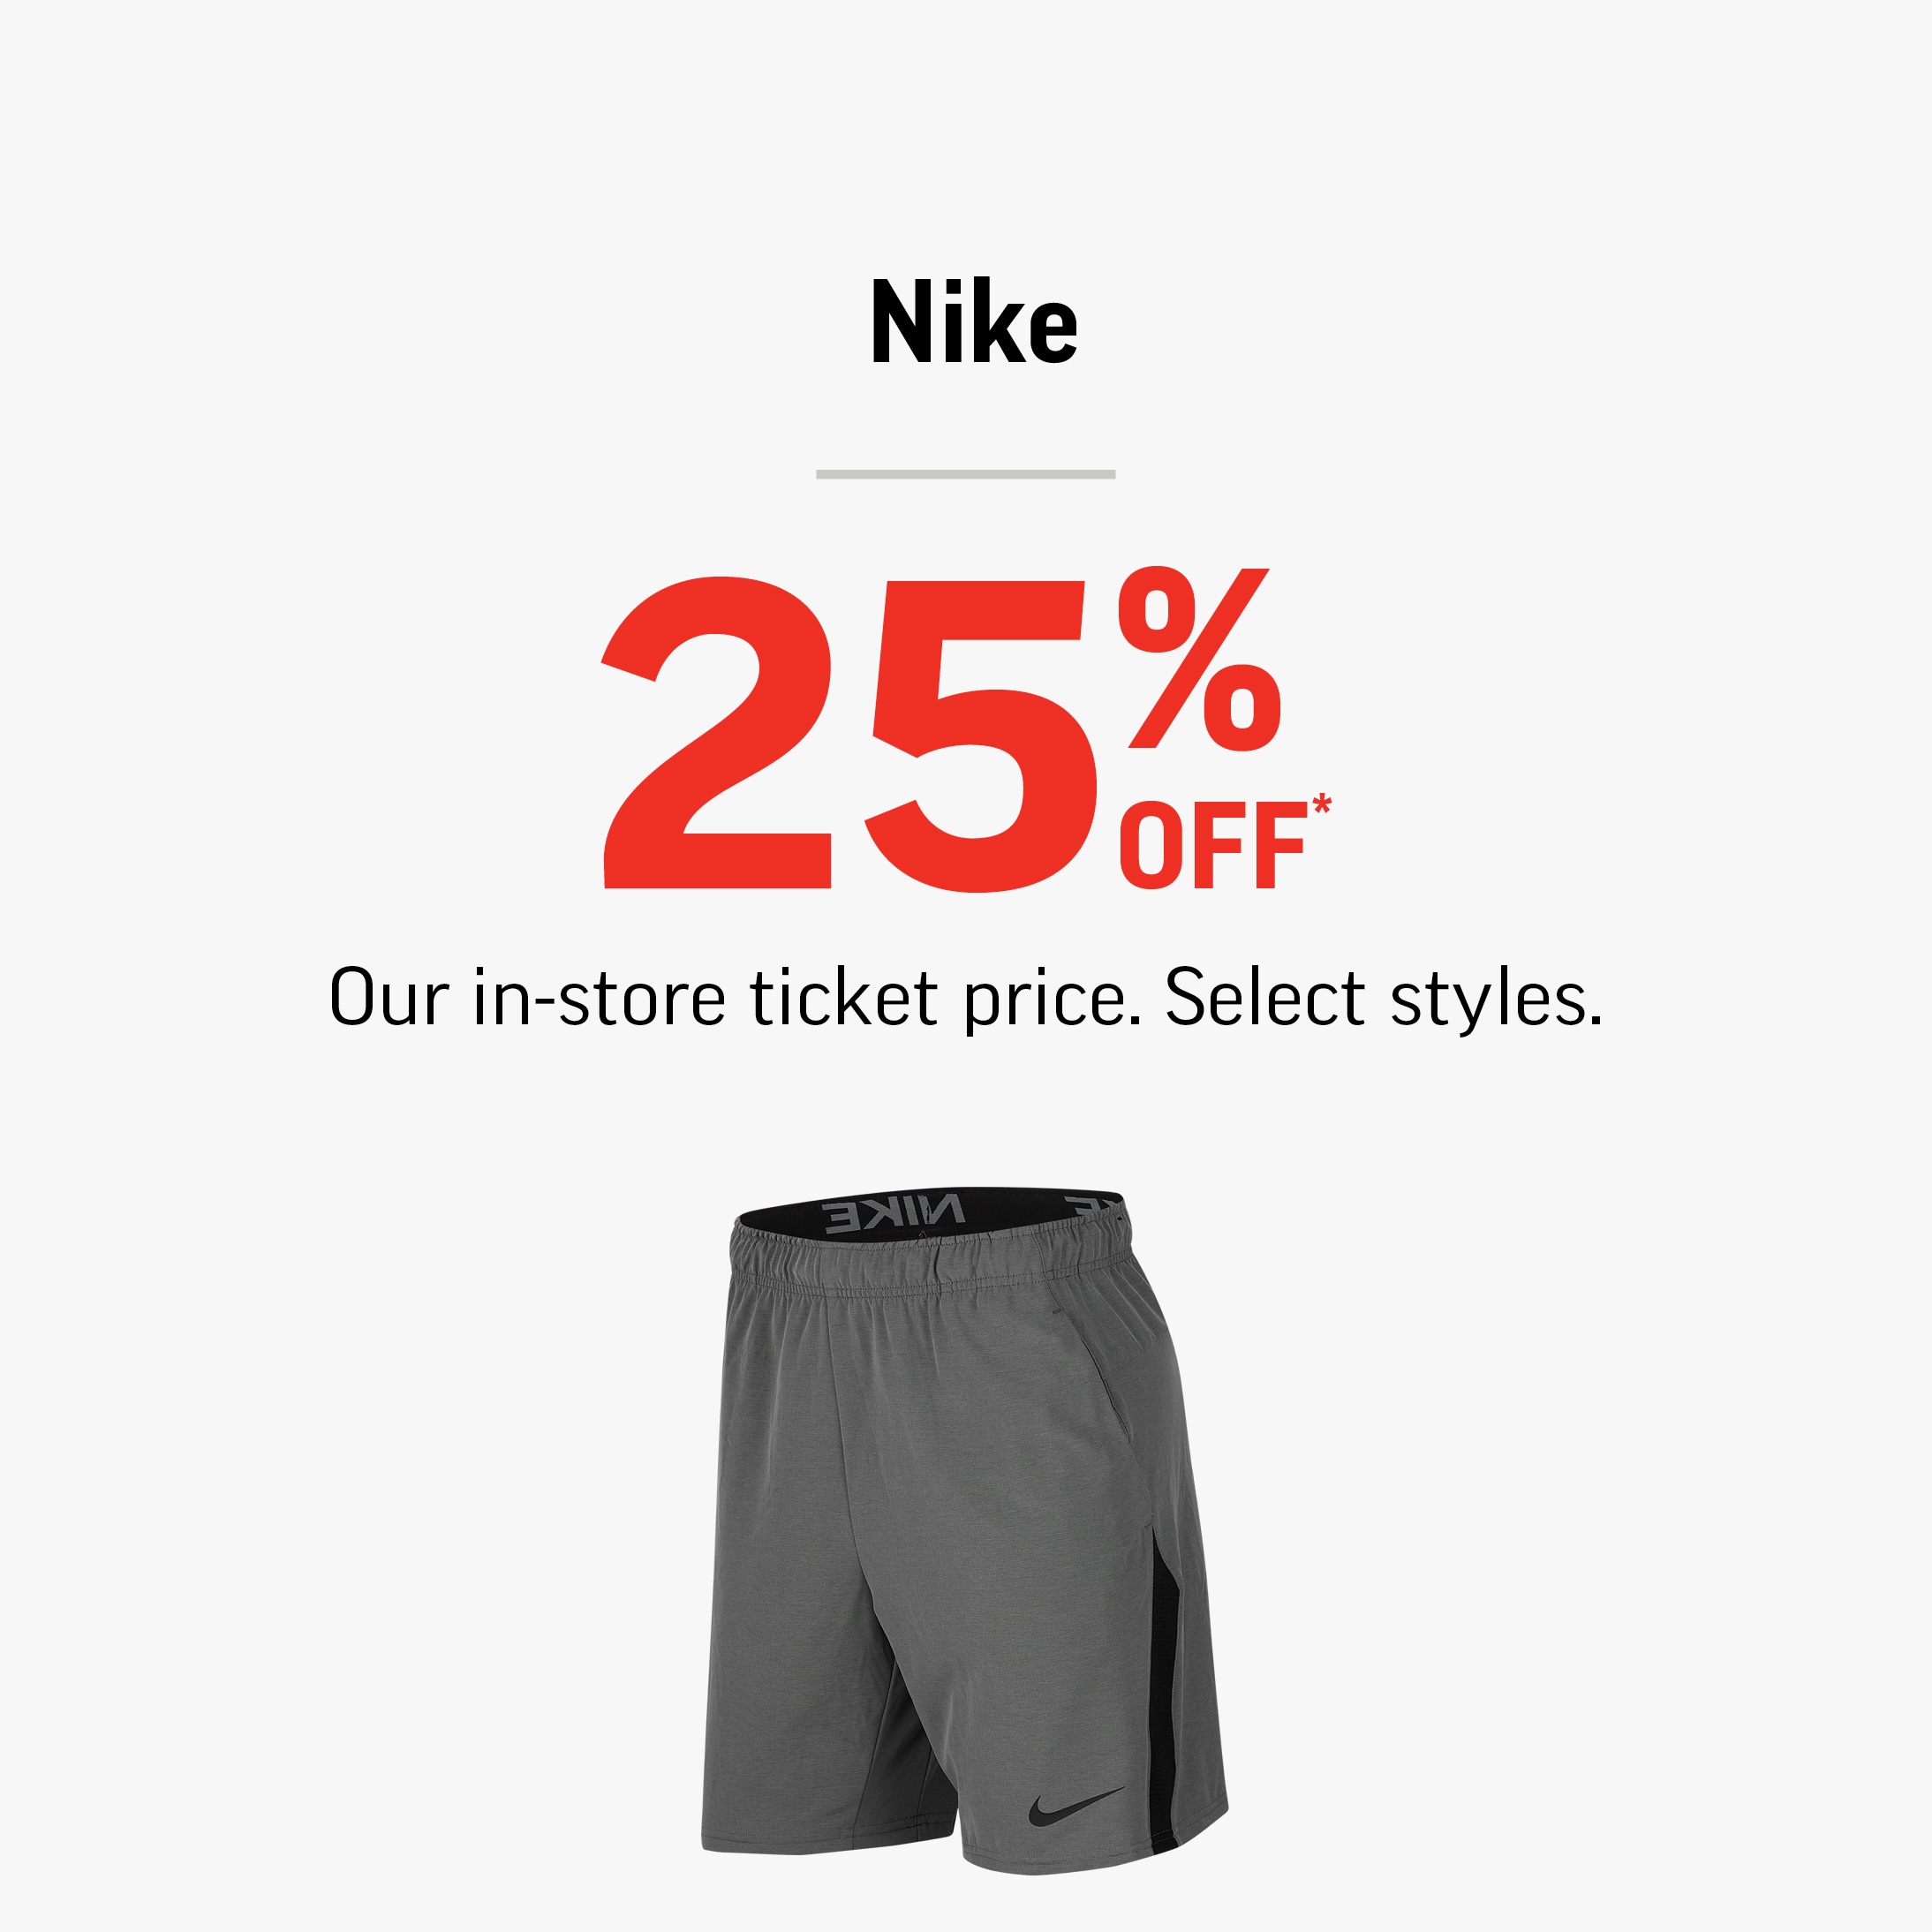 25% off Nike!